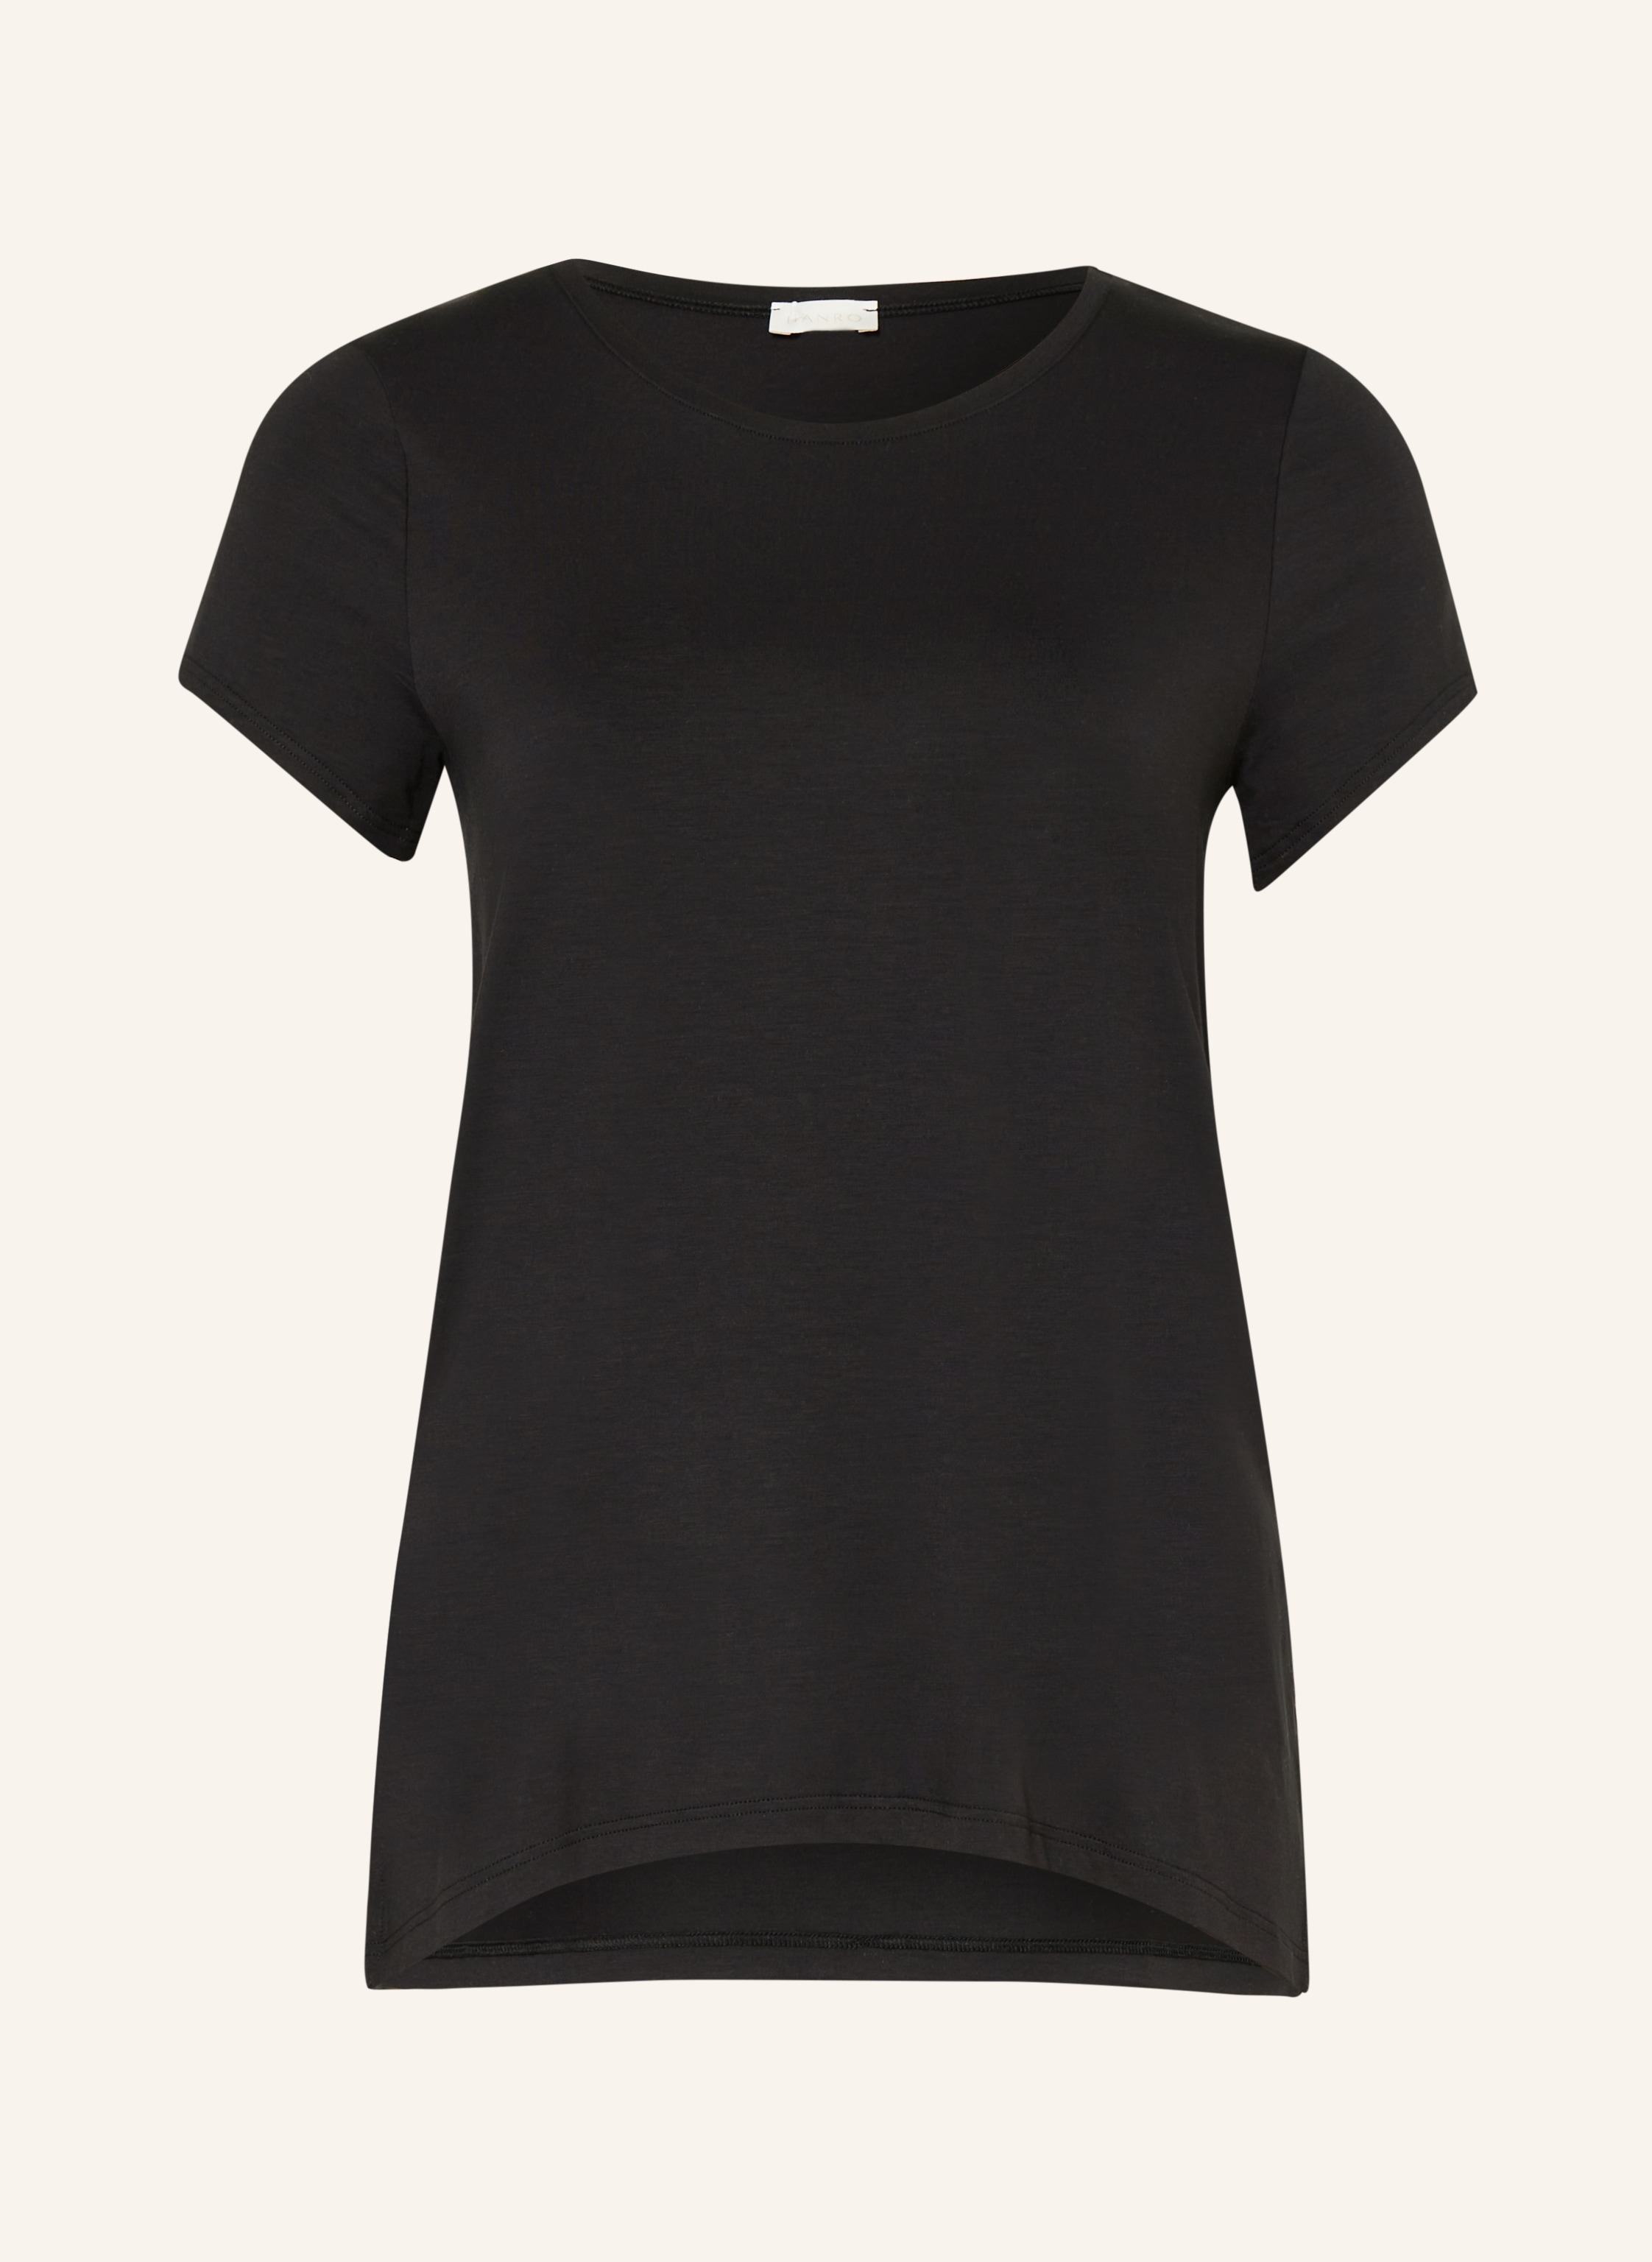 HANRO Yoga Shirt langarm schwarz Loungewear - Underwear-Shop